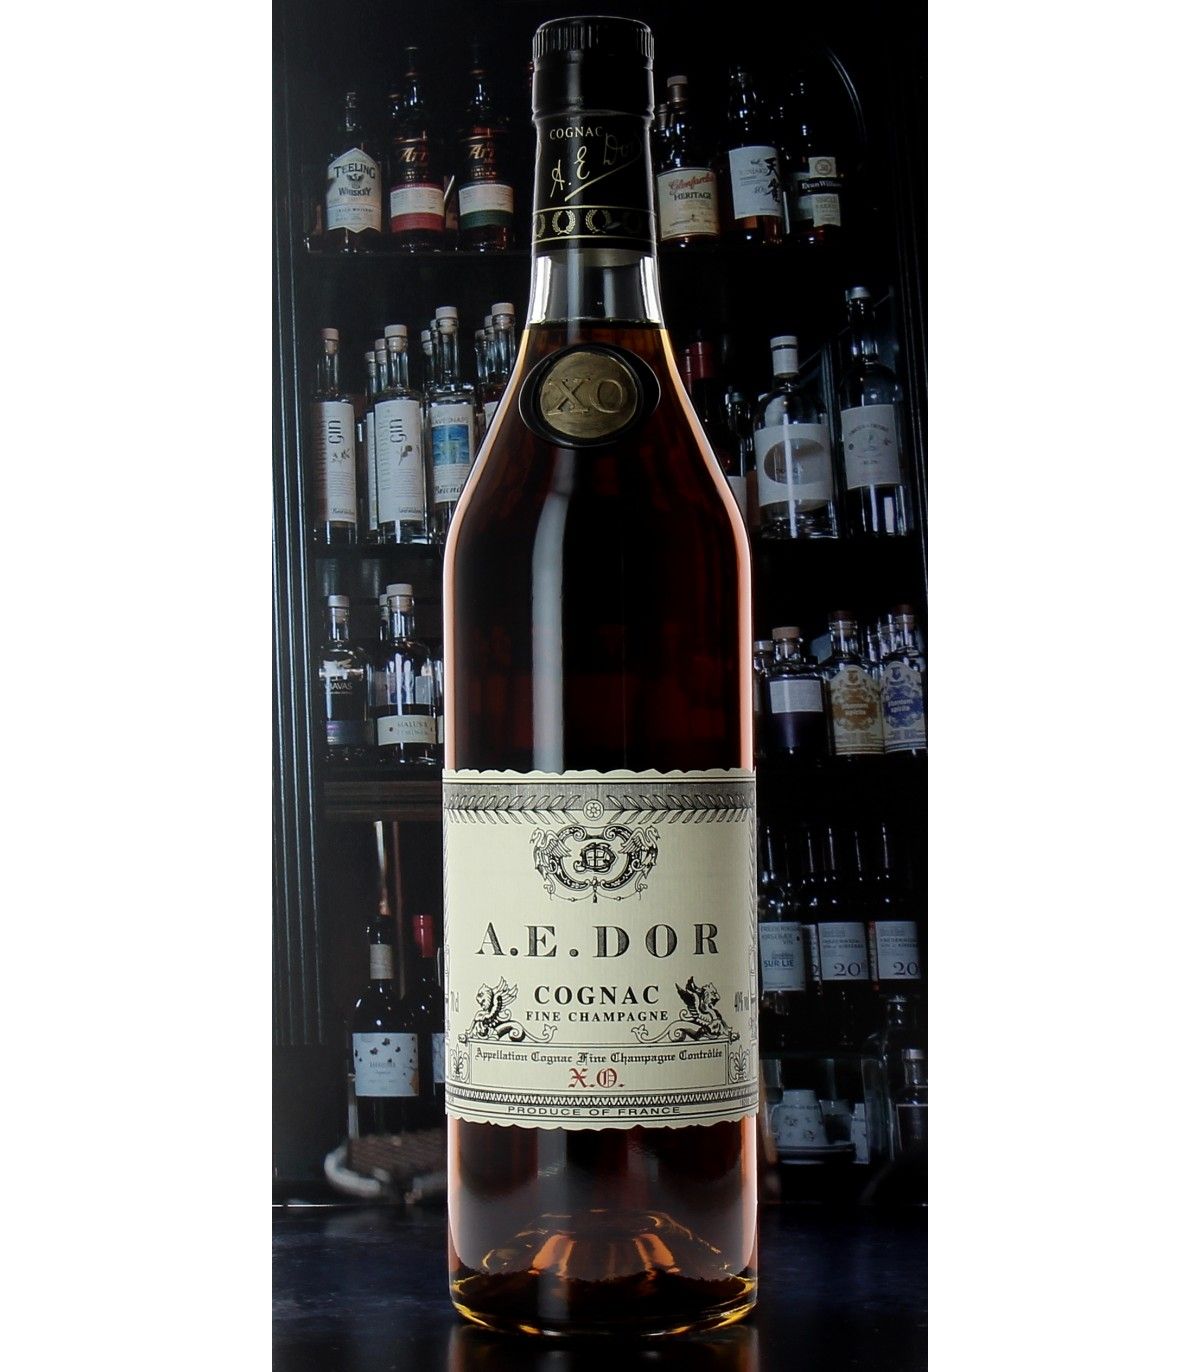 Cognac X.O Fine Champagne by the Maison A.E DOR